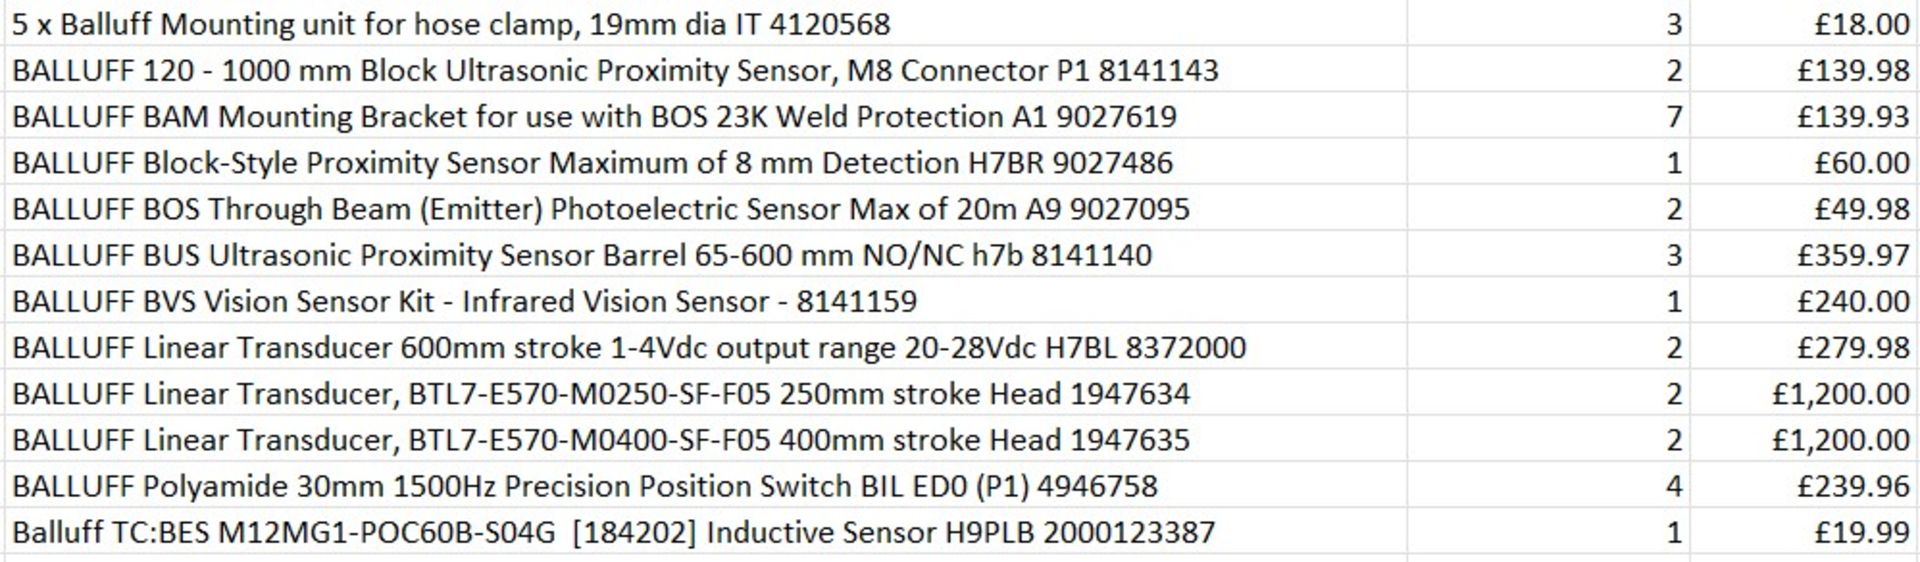 £4k worth of Balluff items across 13 products - sensor / transducer etc